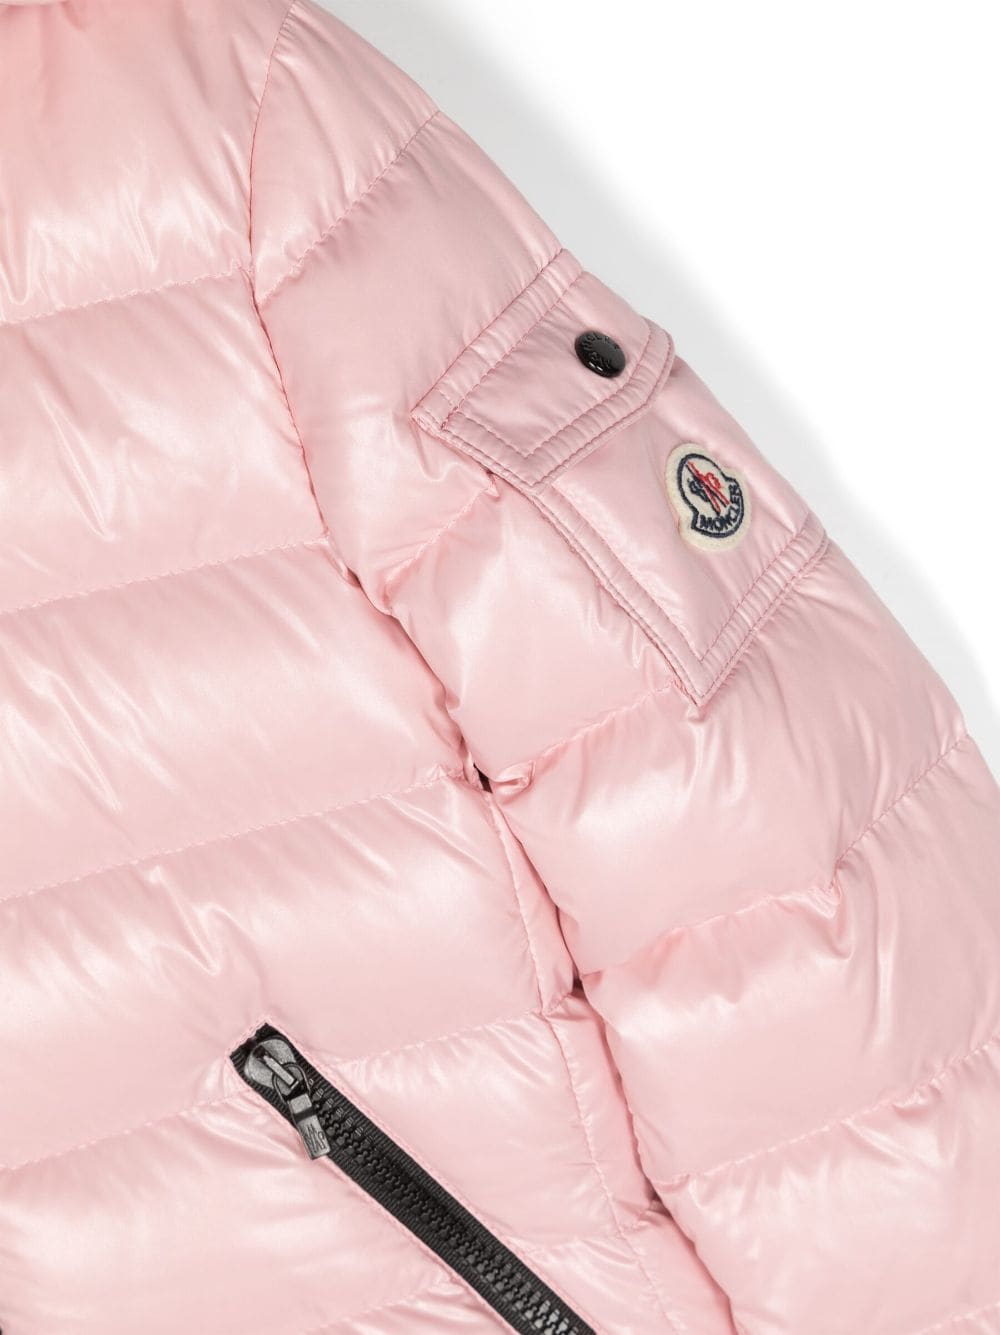 Pink Bady jacket for girls